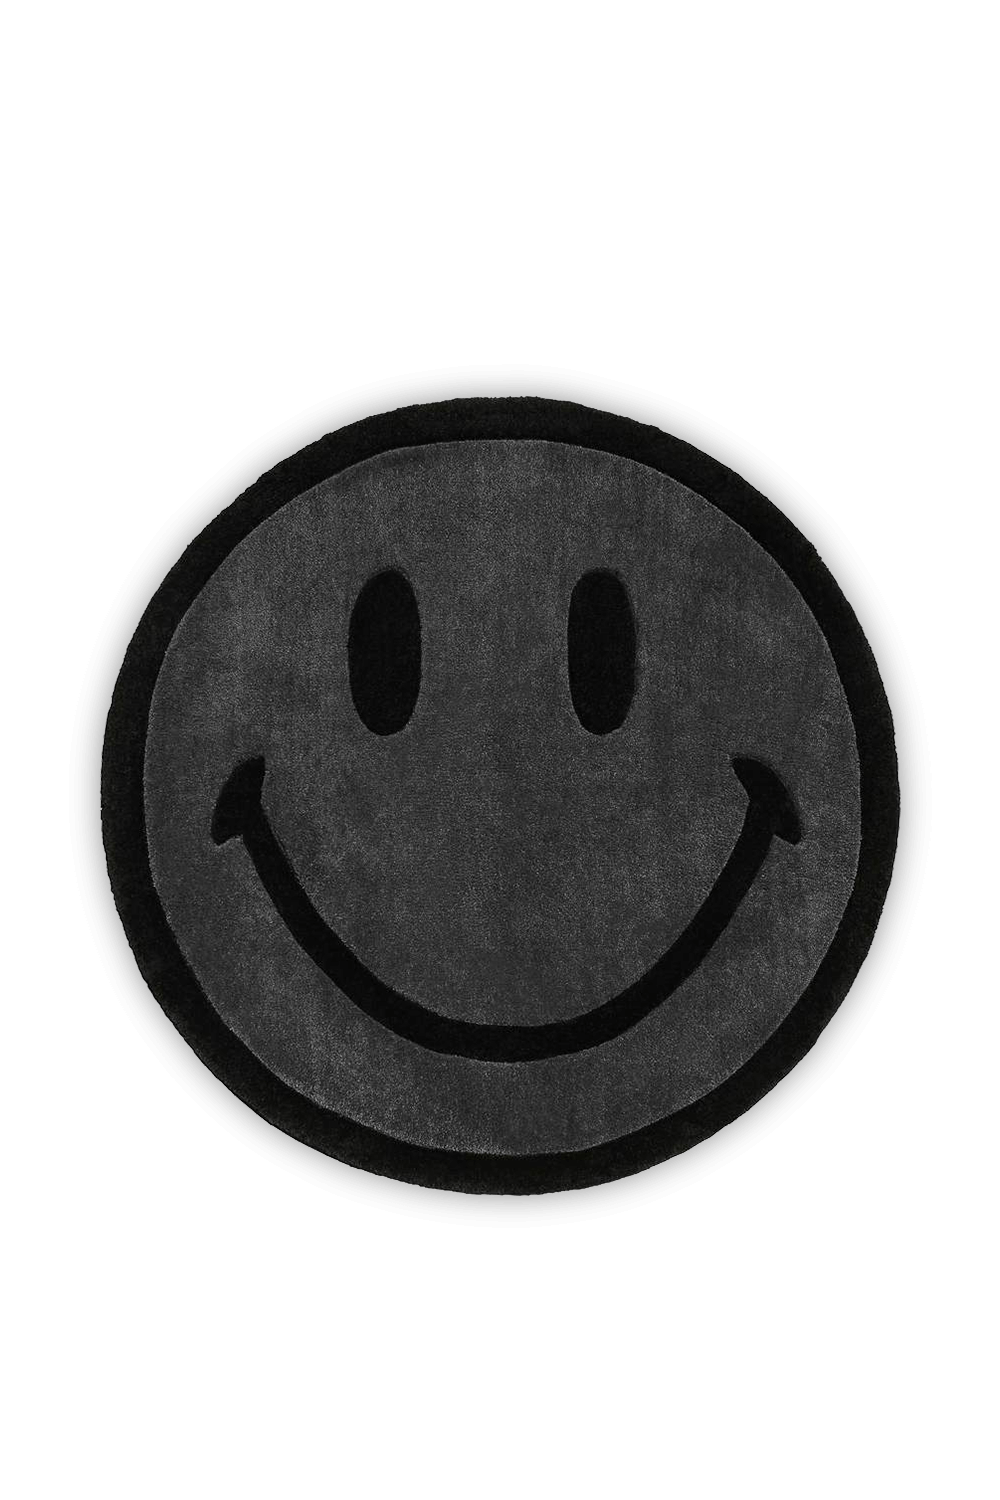 Smiley Rug in Black MARKET